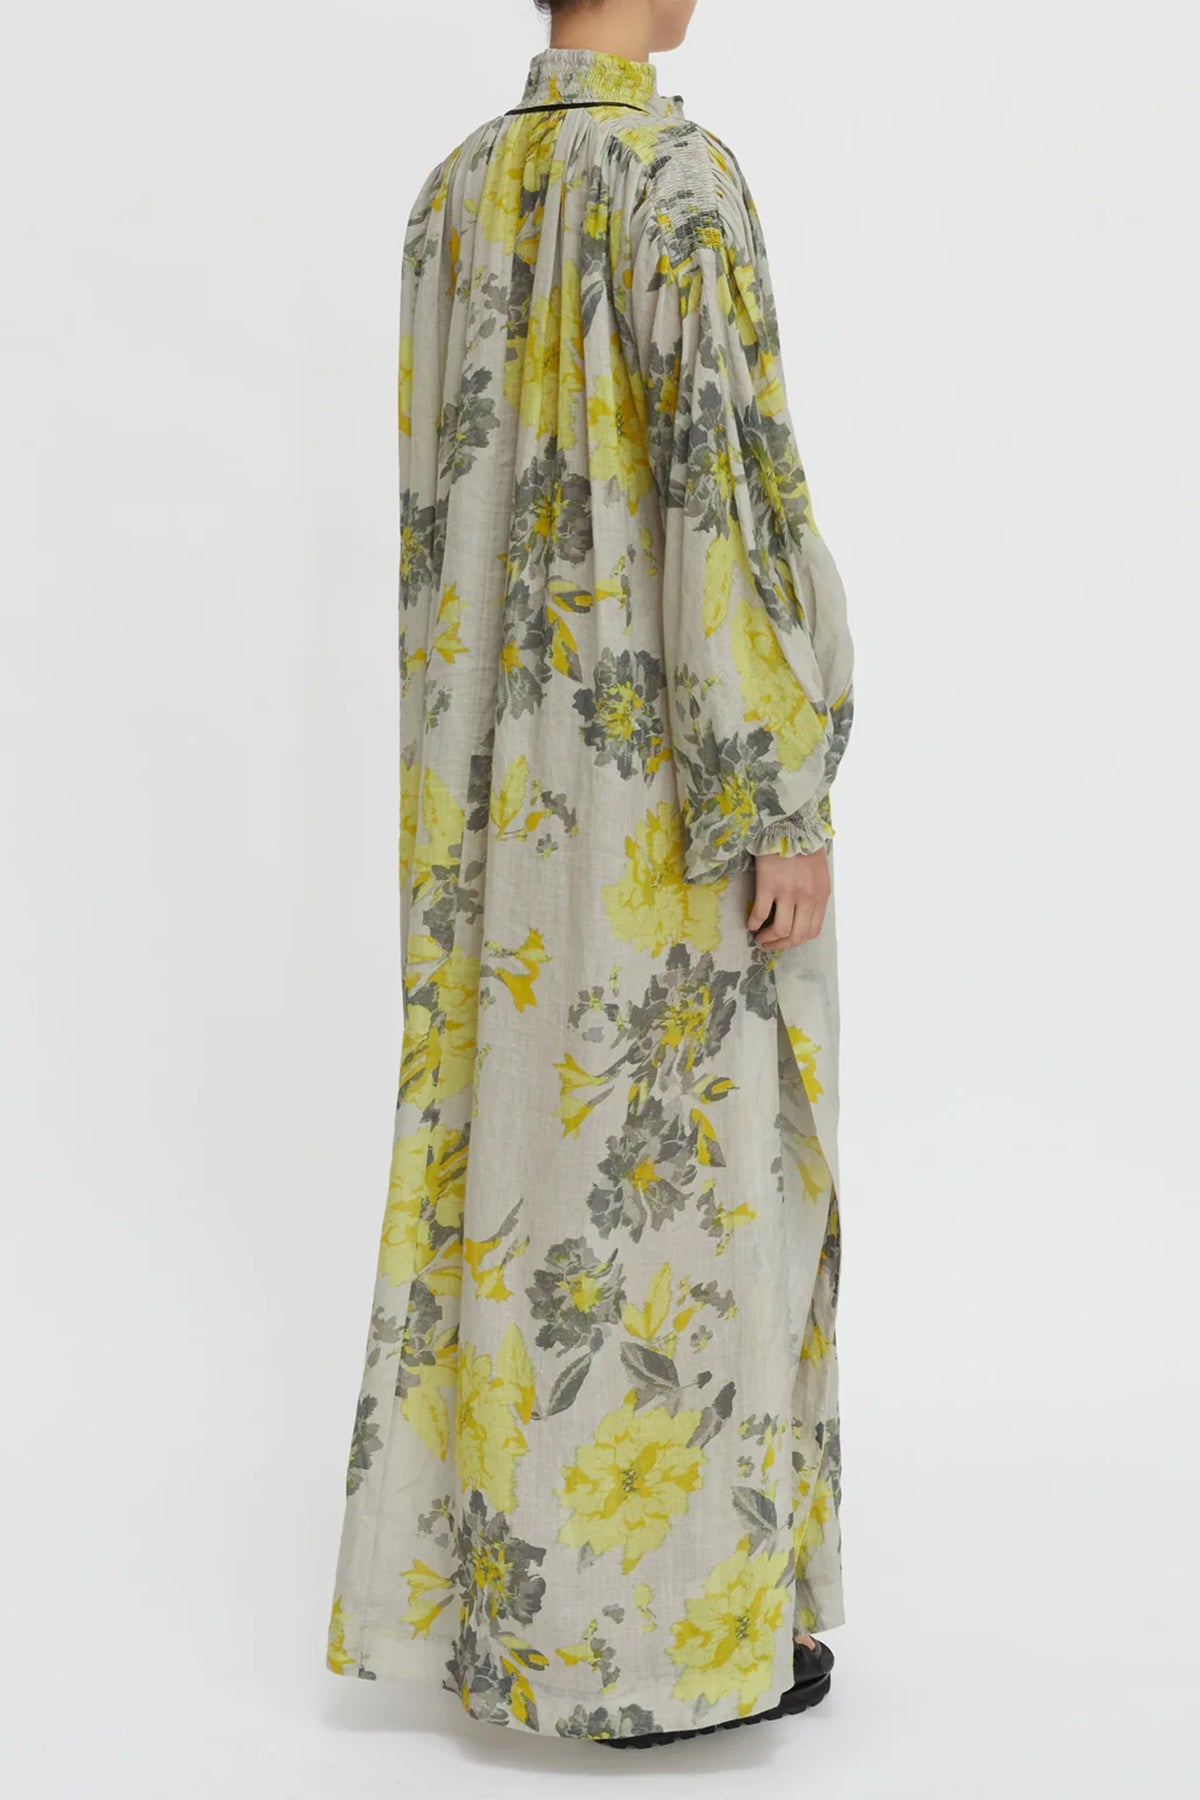 Lila Dress in Lemon - shop-olivia.com